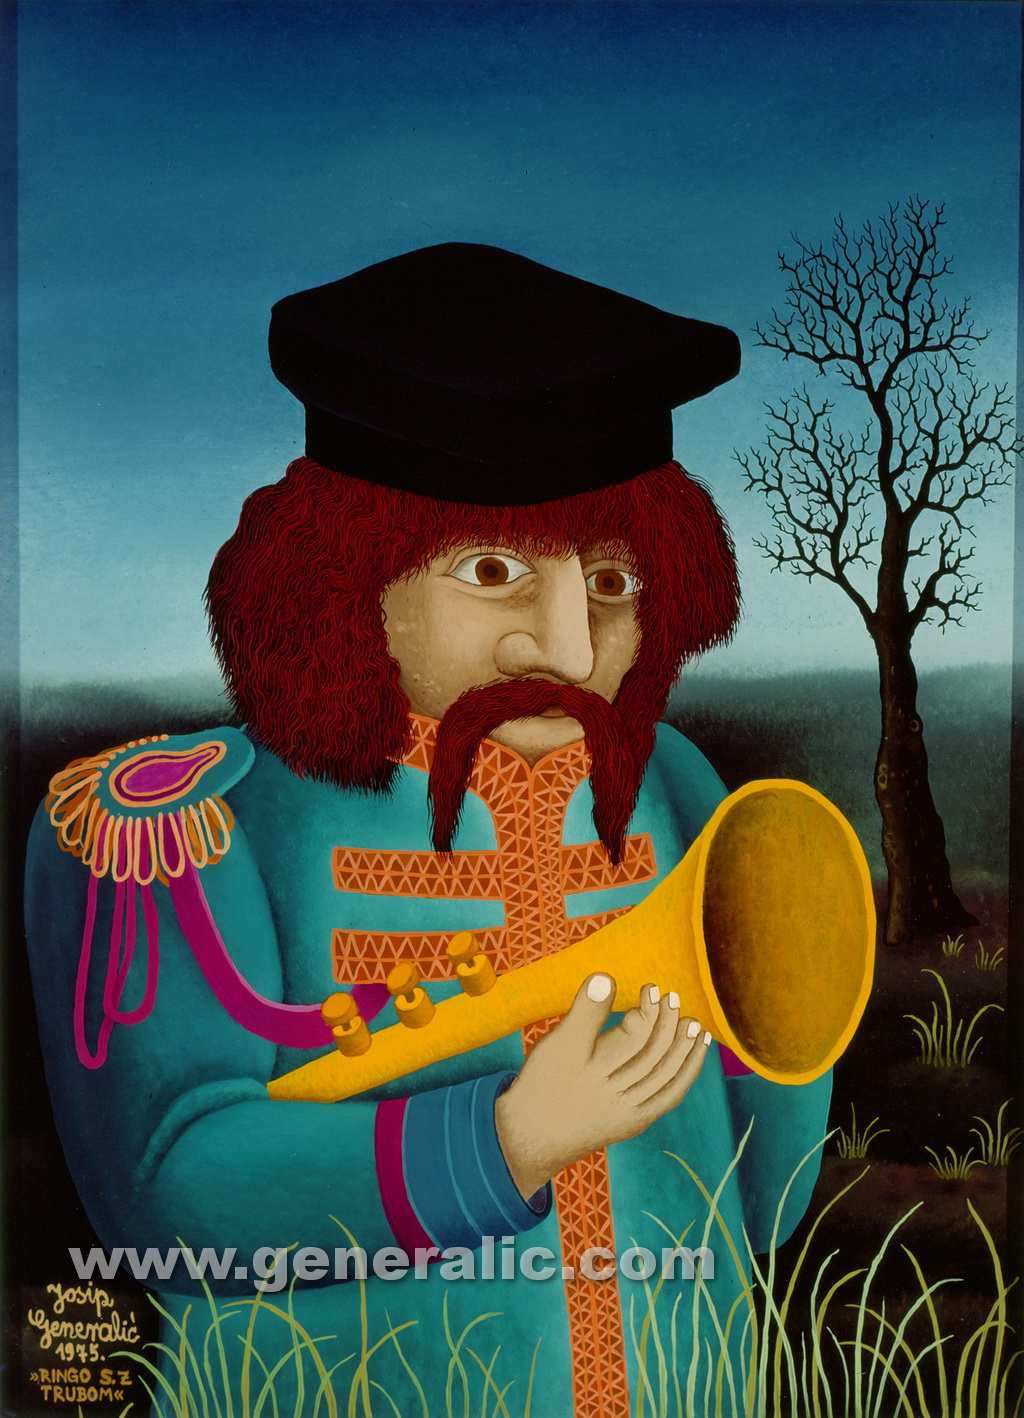 Josip Generalic, 1975, Ringo Star with a trumpet, oil on glass, 55x40 cm